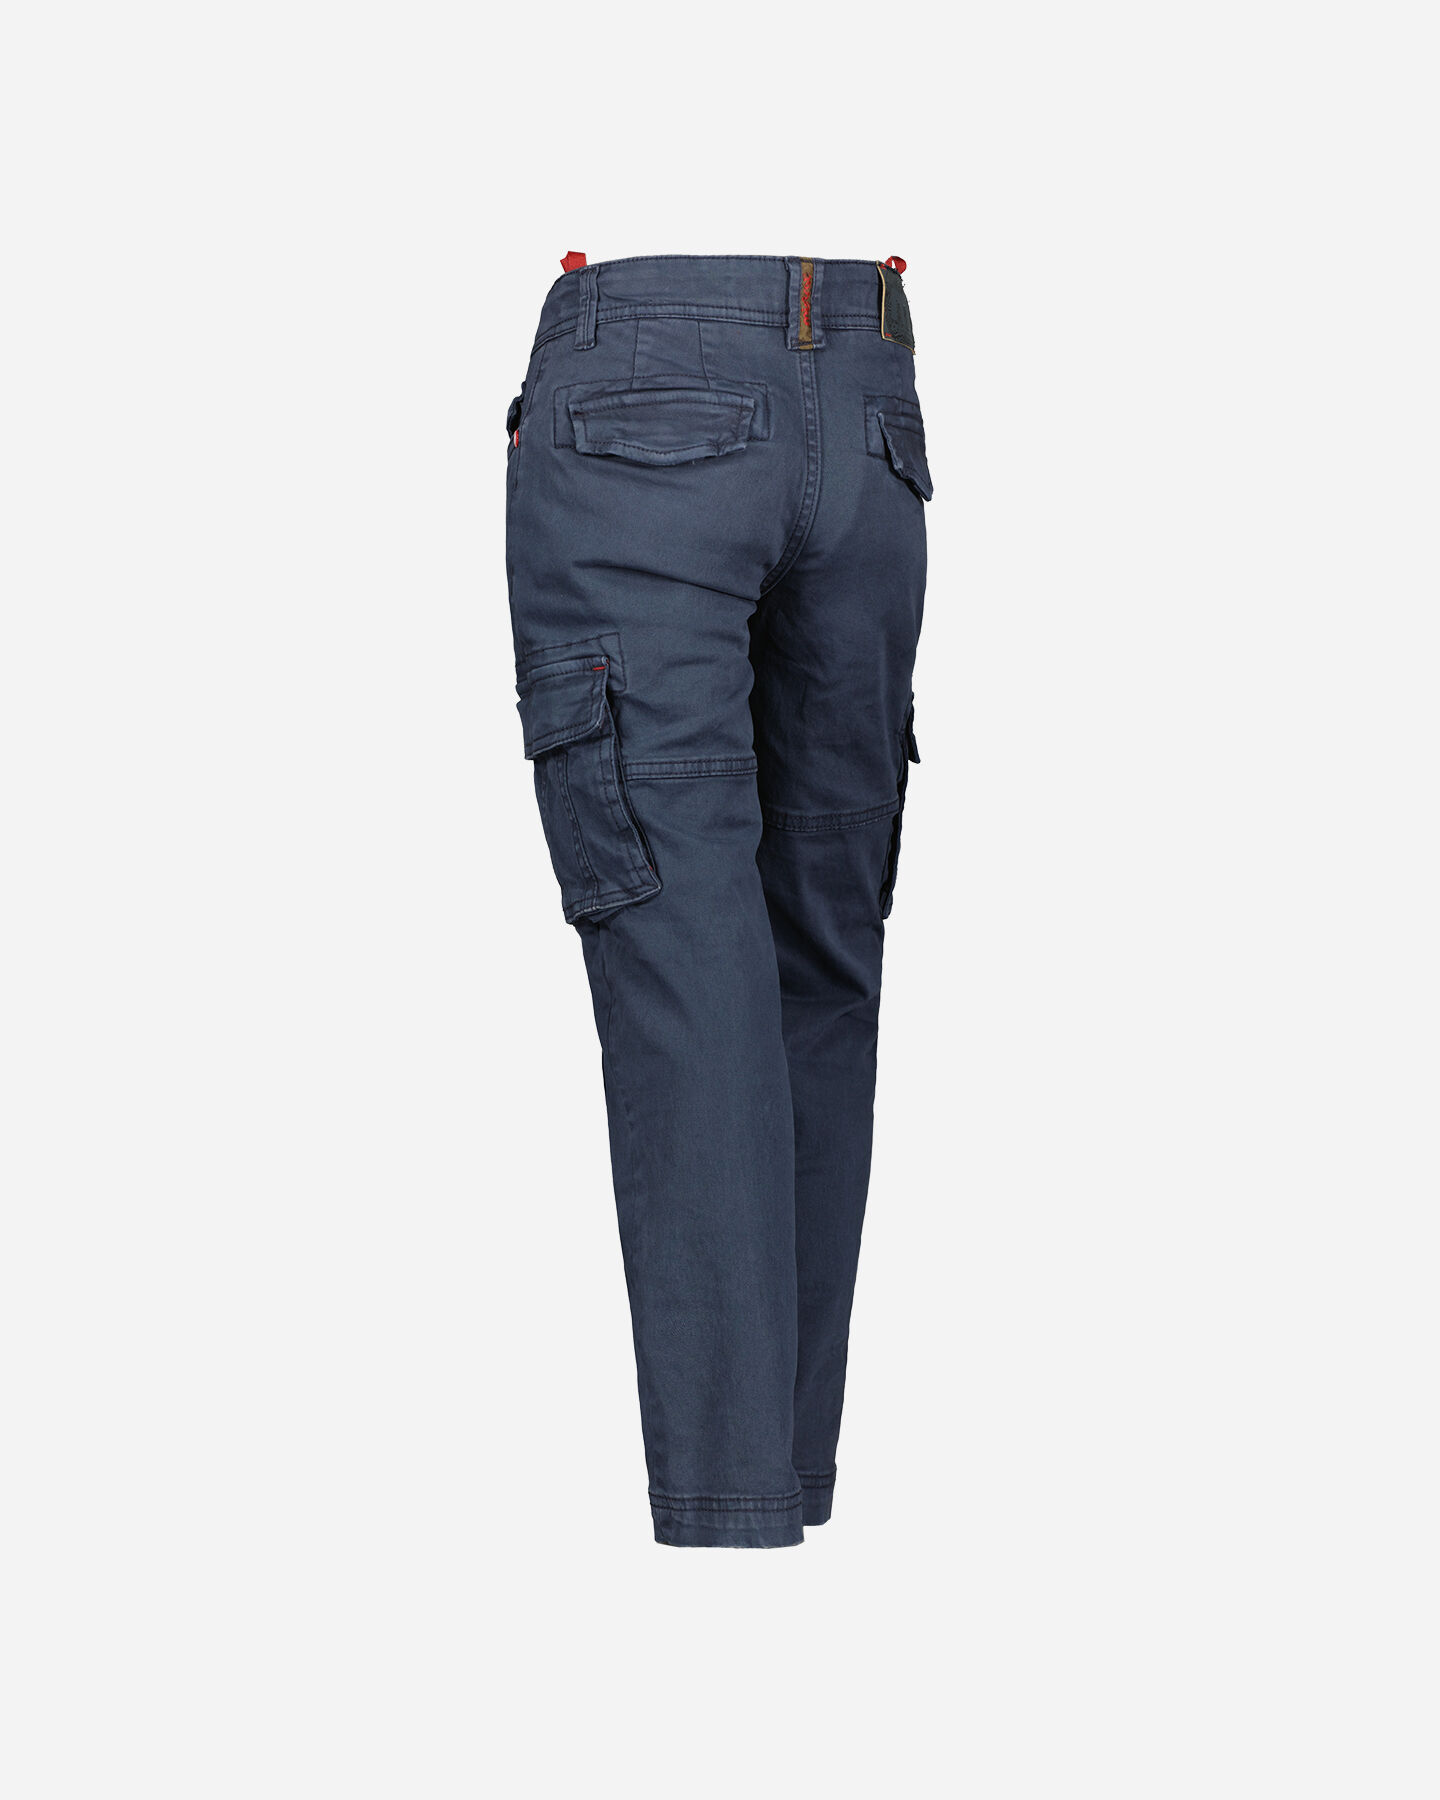  Pantalone MISTRAL CARGO JR S4107803|519|8A scatto 2